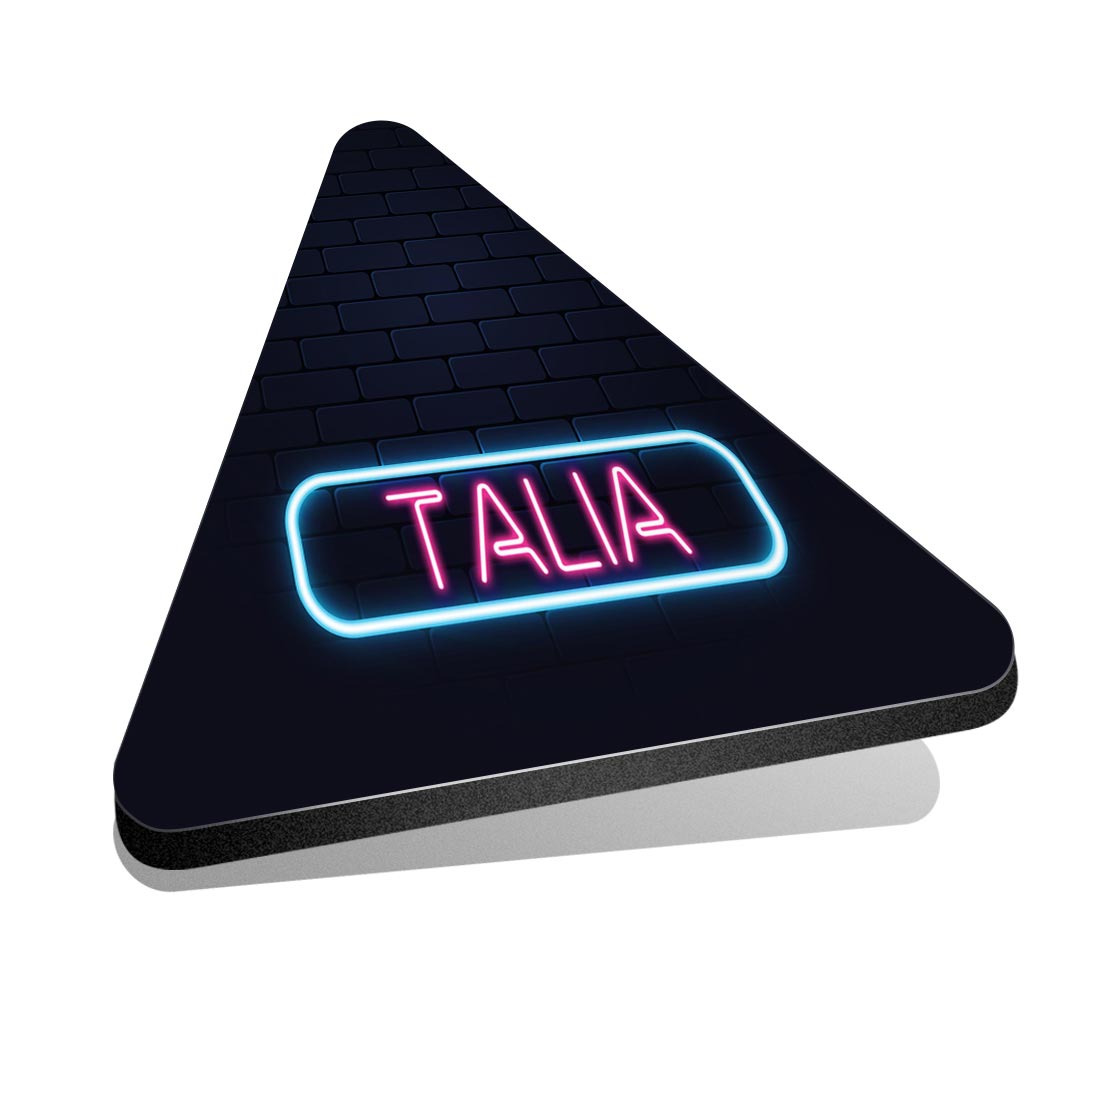 1x Triangle Fridge MDF Magnet Neon Sign Design Talia Name #353527 - Picture 1 of 1